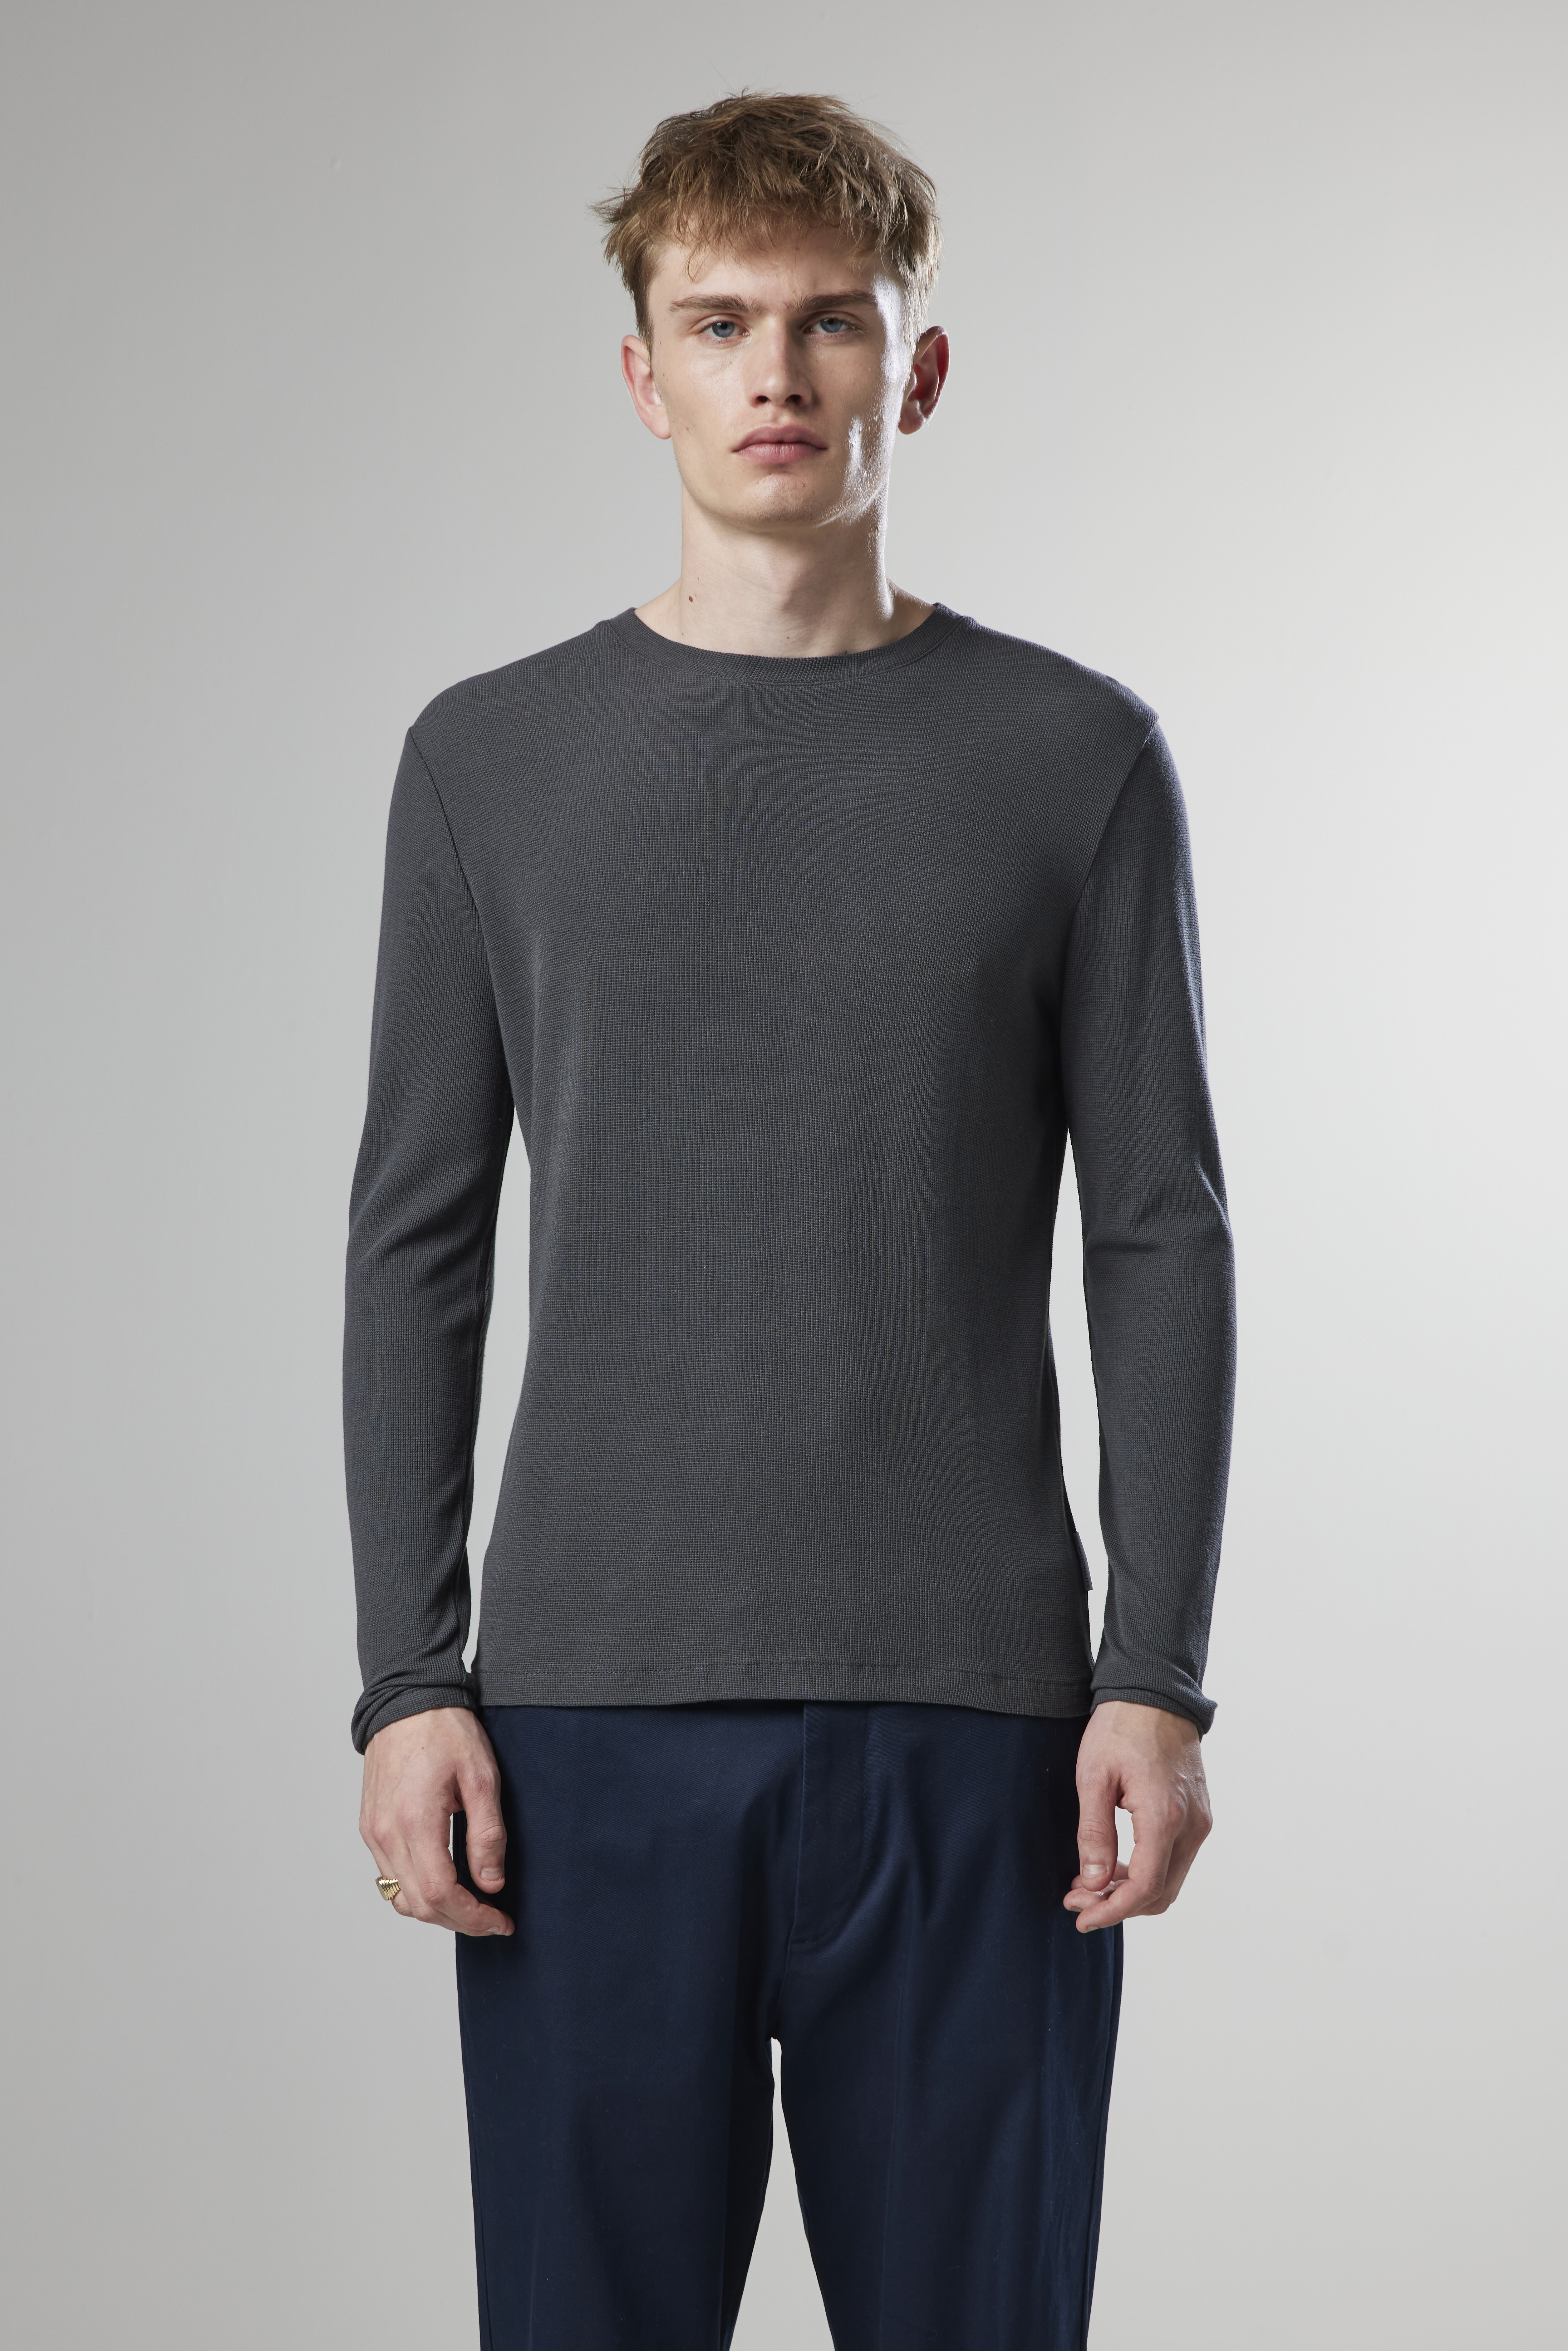 Clive 3323 men's t-shirt - Grey - Buy online at